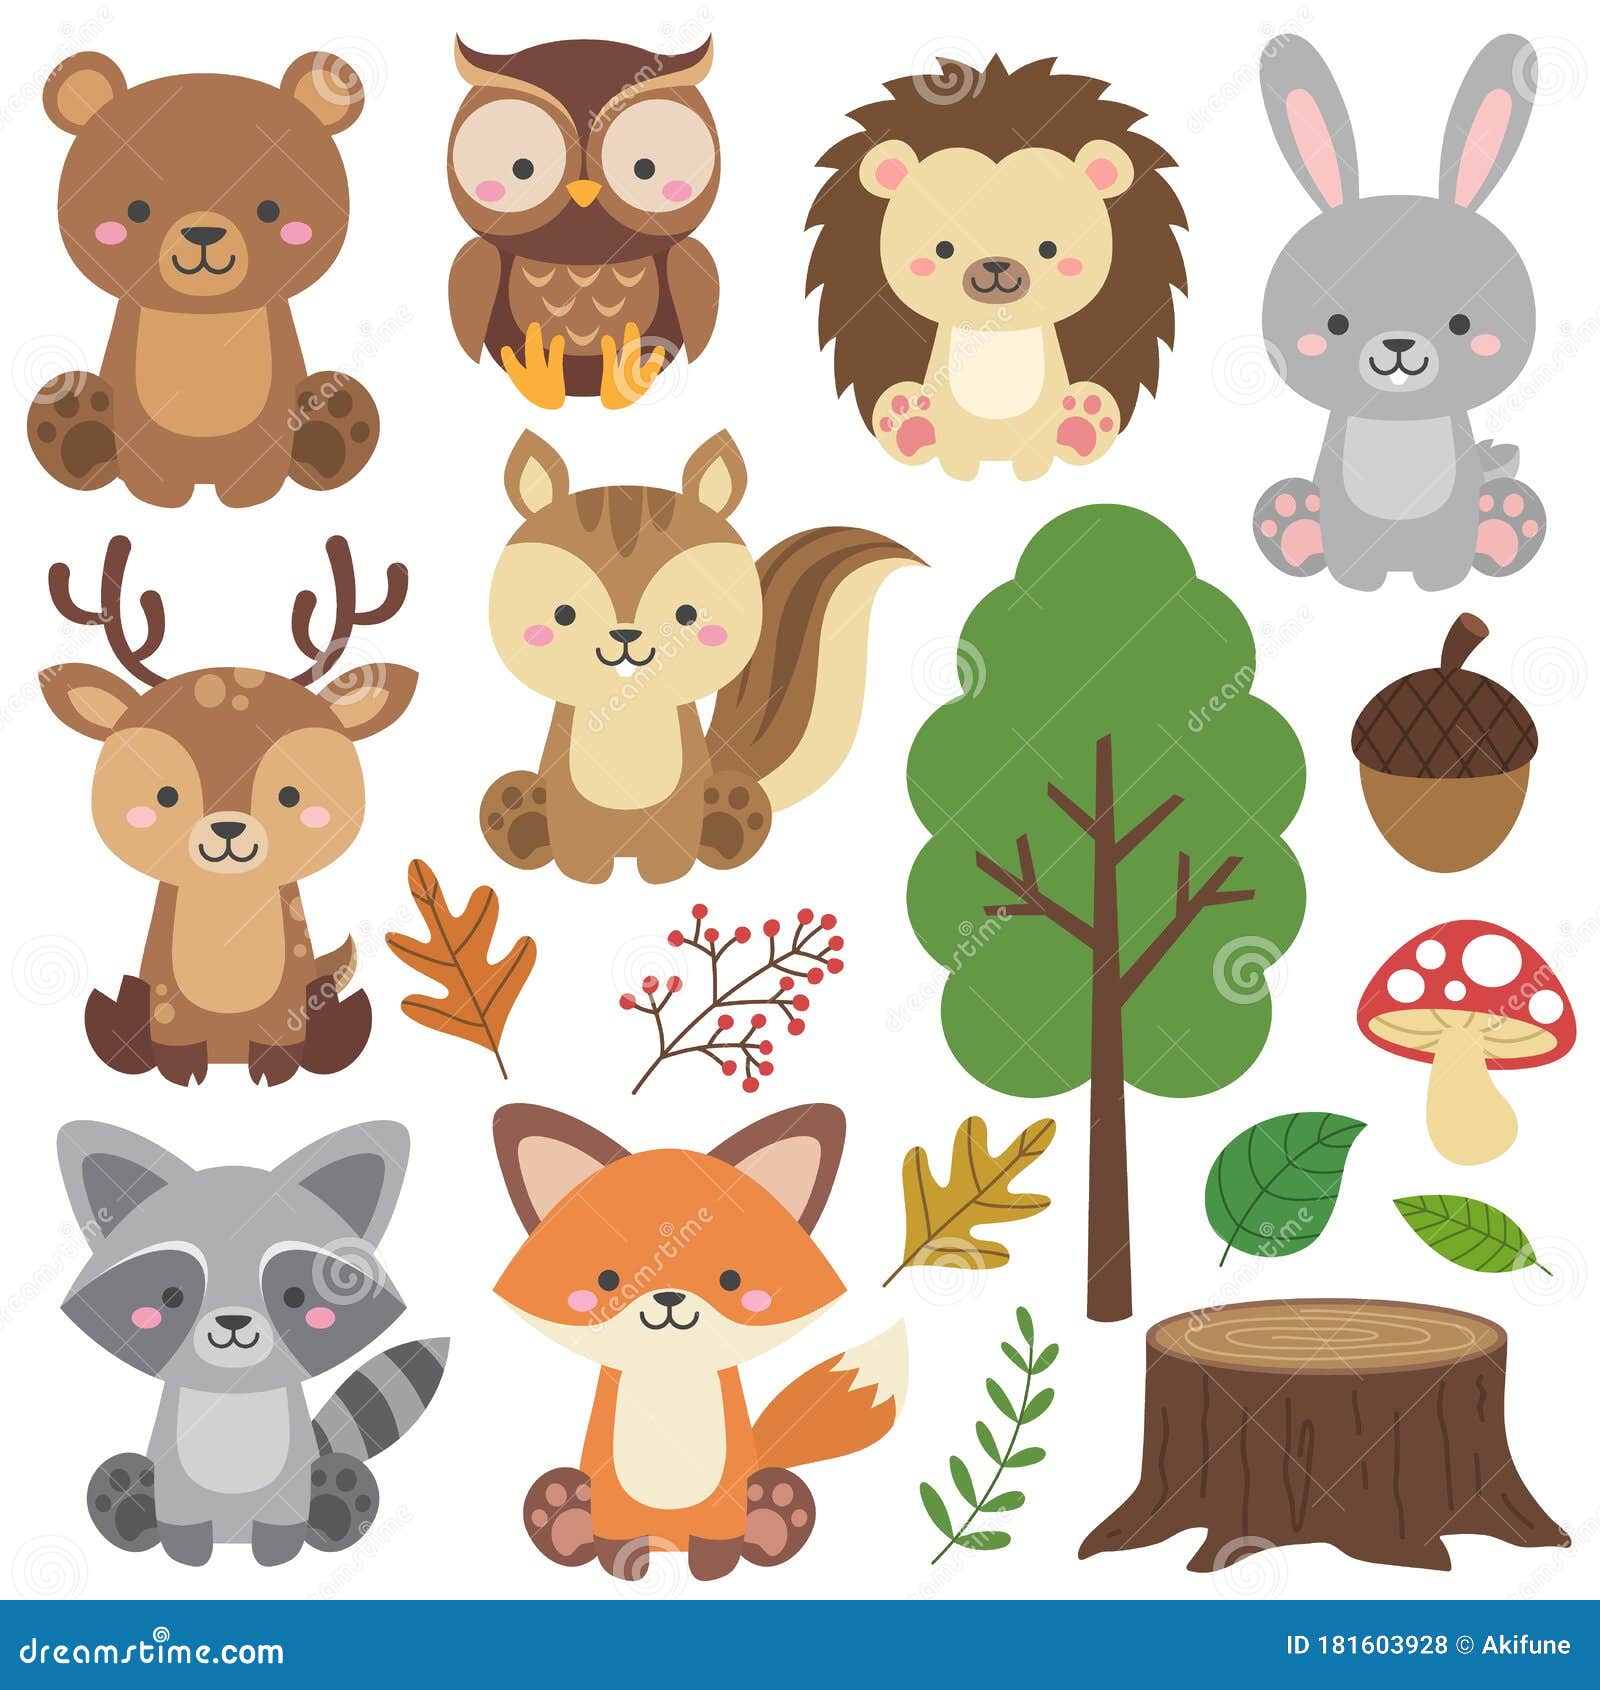 Adorable Sitting Woodland Animals Vector Set. Forest Animals in Cartoon ...